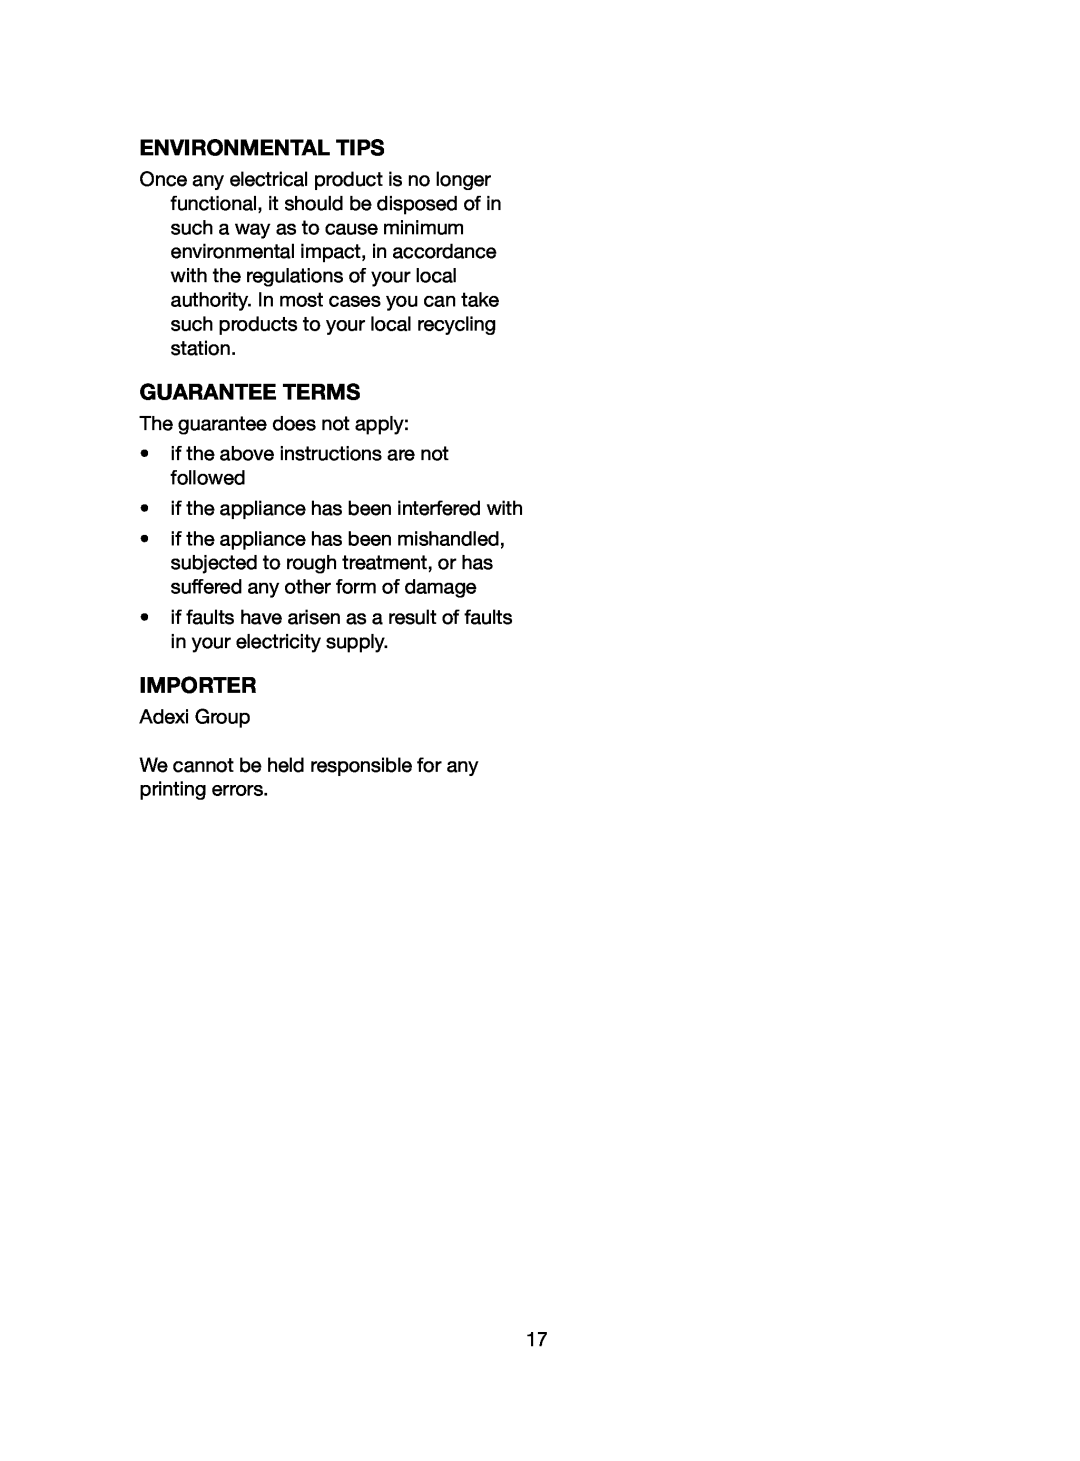 Melissa 745-183 manual Environmental Tips, Guarantee Terms, Importer 